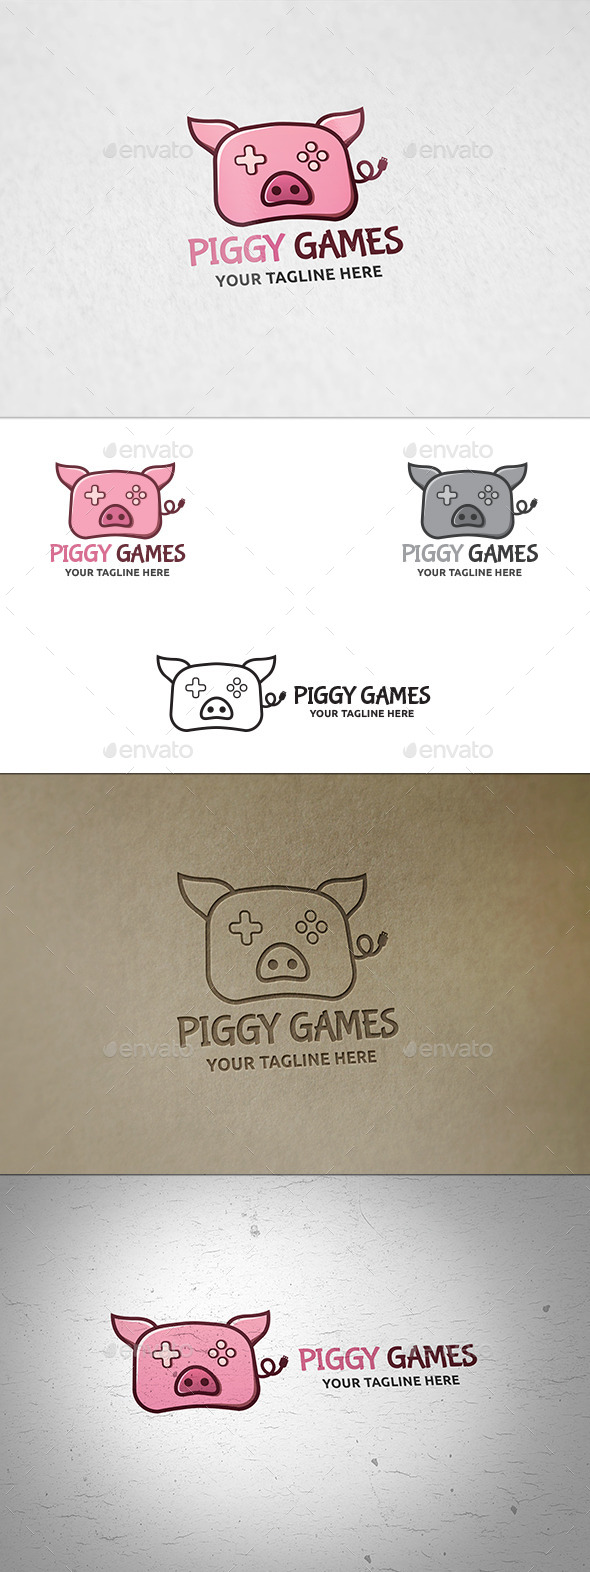 Piggy Games - Logo Template